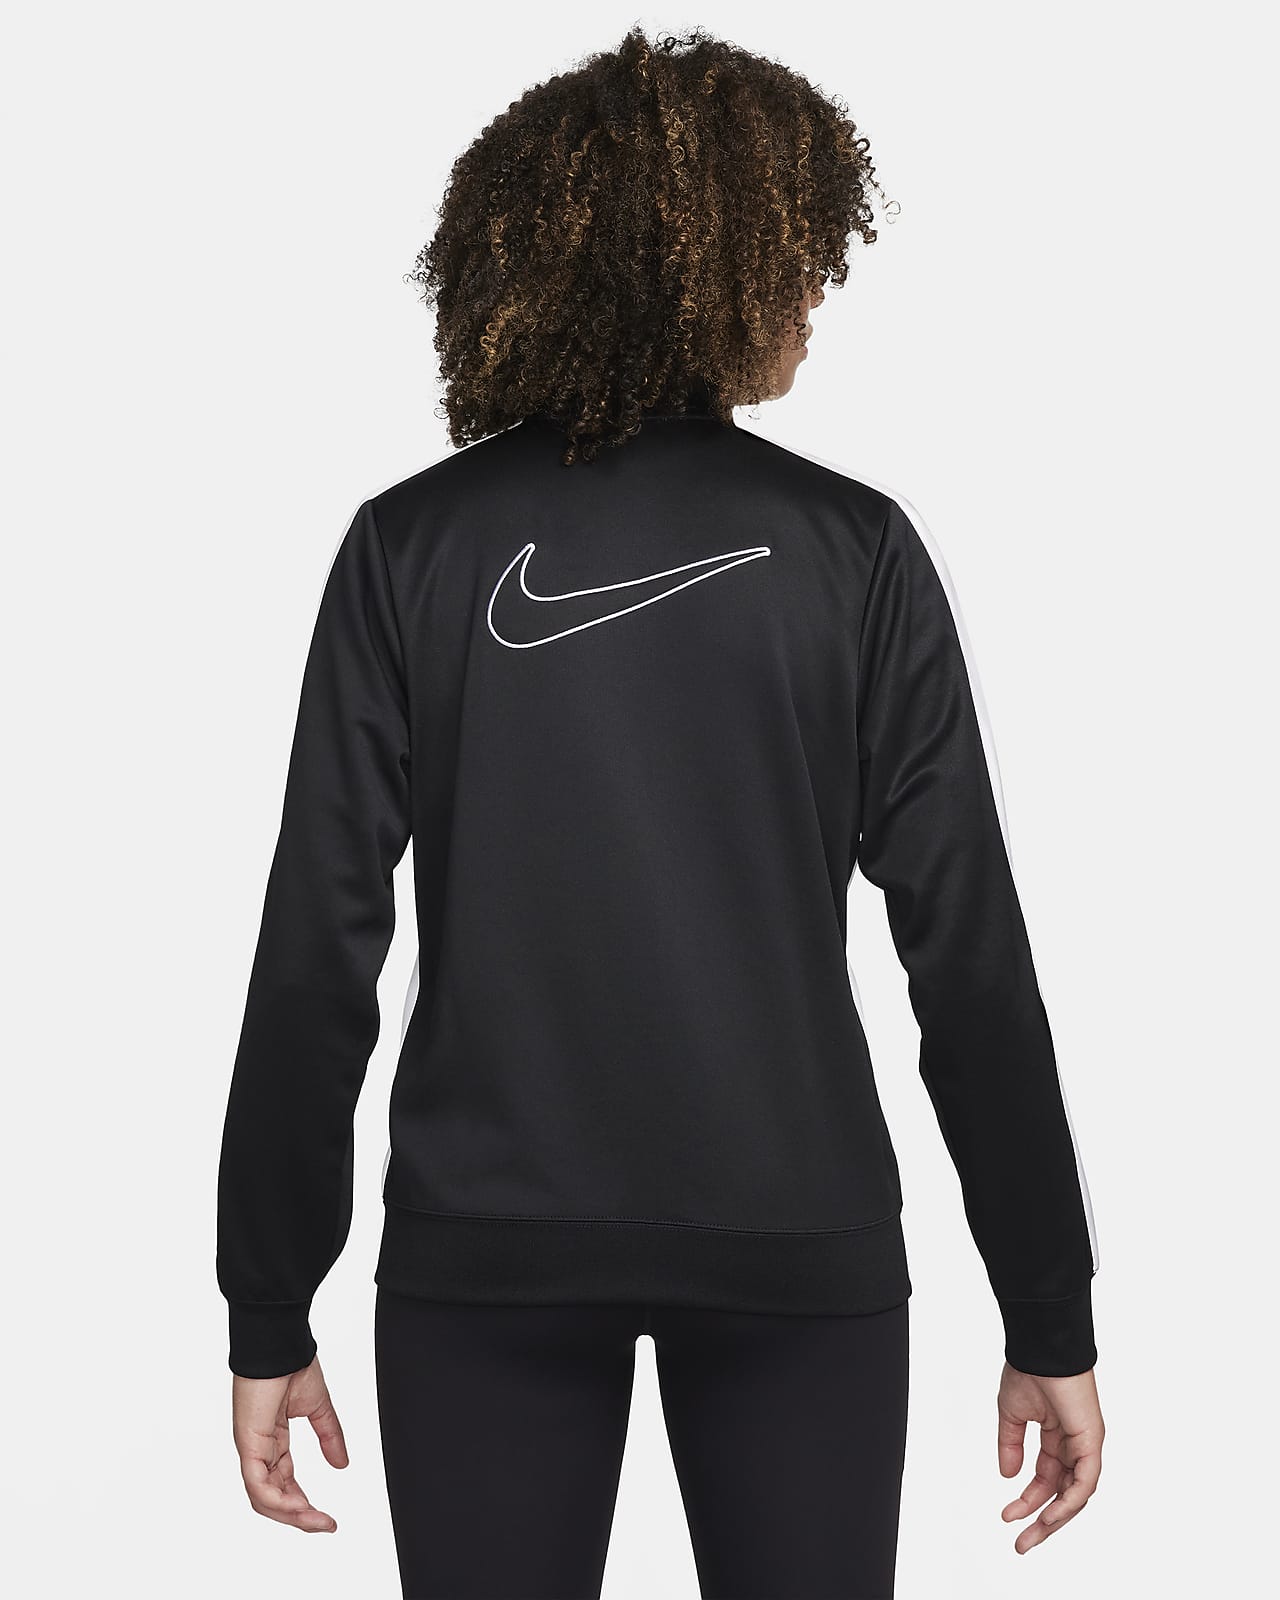 Women's Sportswear Clothing. Nike ZA